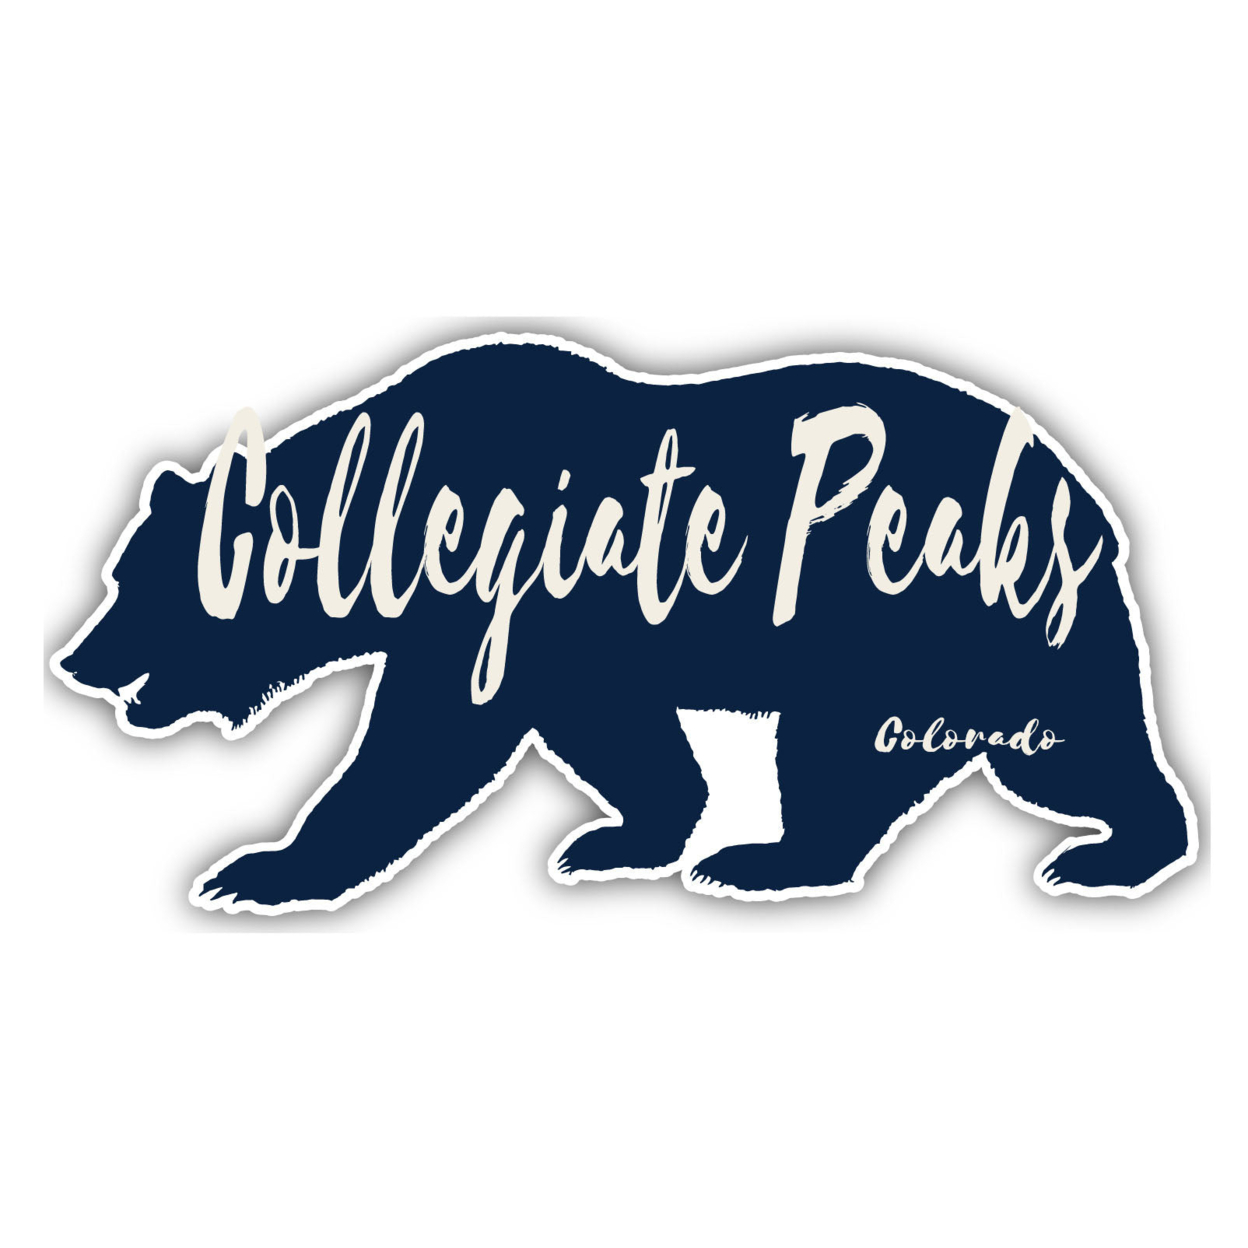 Collegiate Peaks Colorado Souvenir Decorative Stickers (Choose Theme And Size) - 4-Pack, 10-Inch, Bear